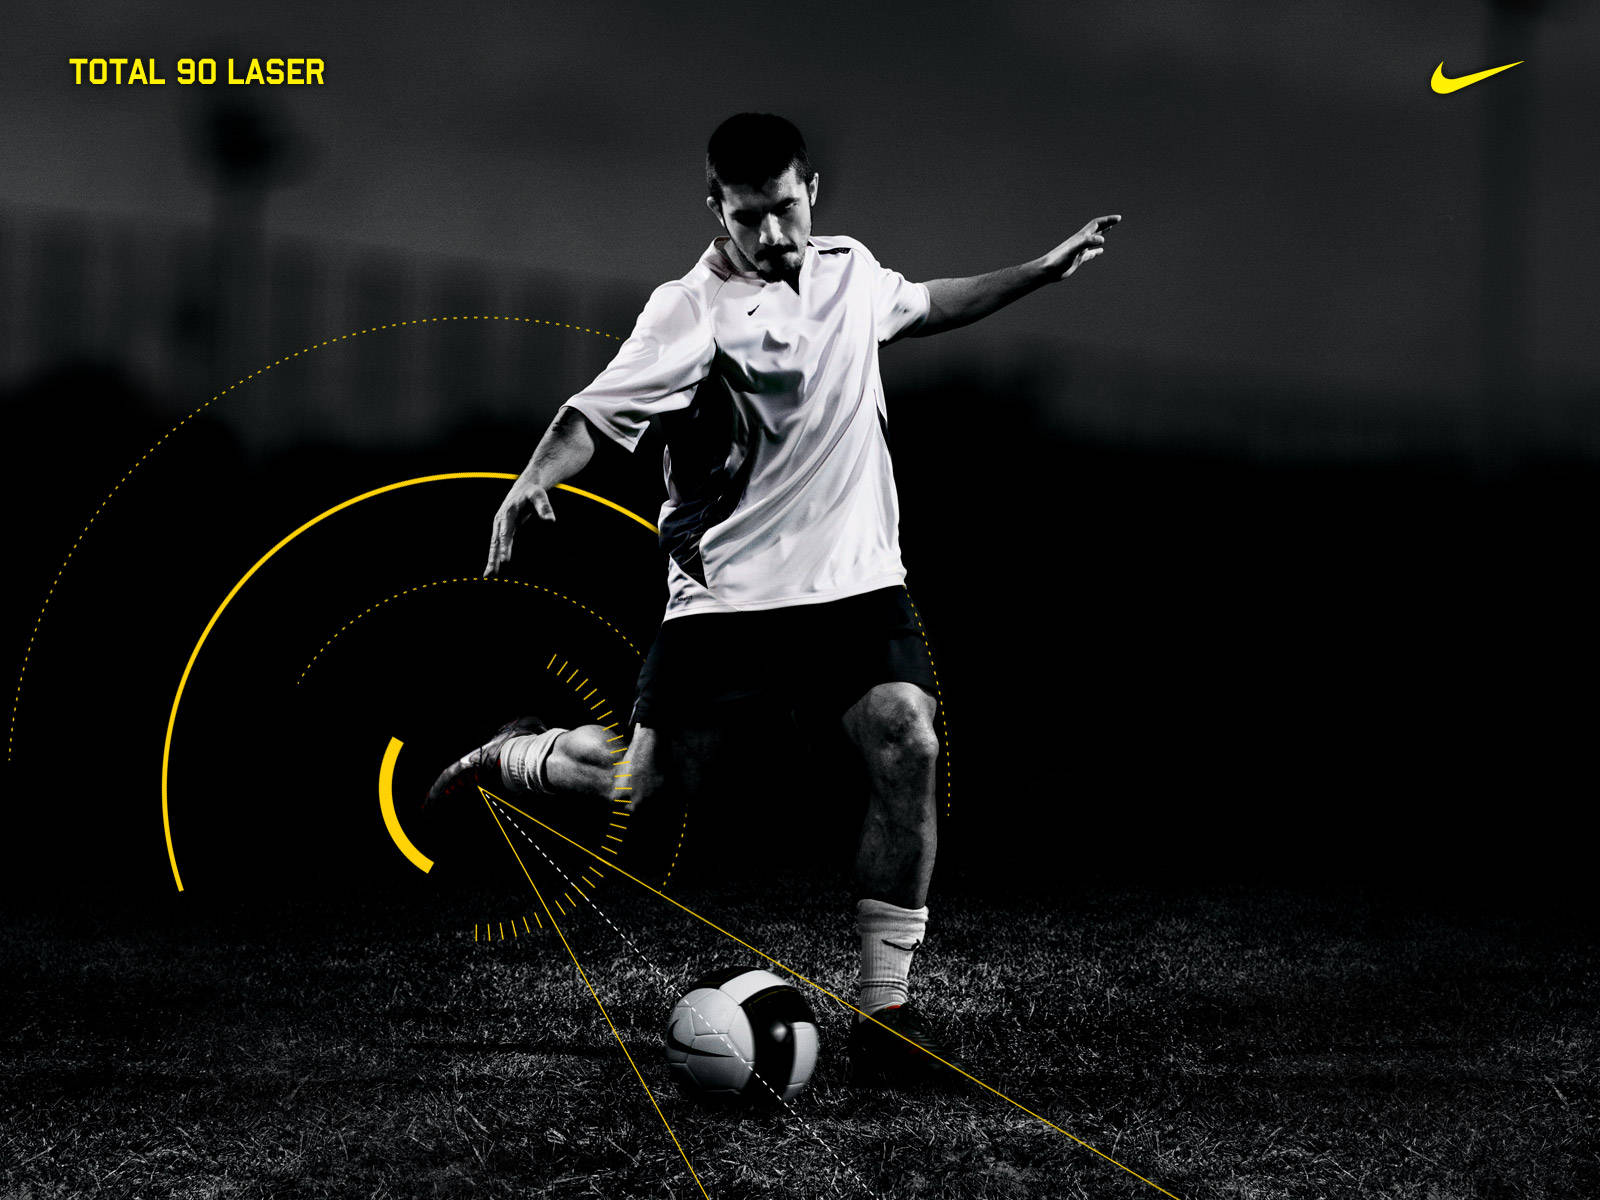 Football Soccer Widescreen Wallpaper HD Collection For